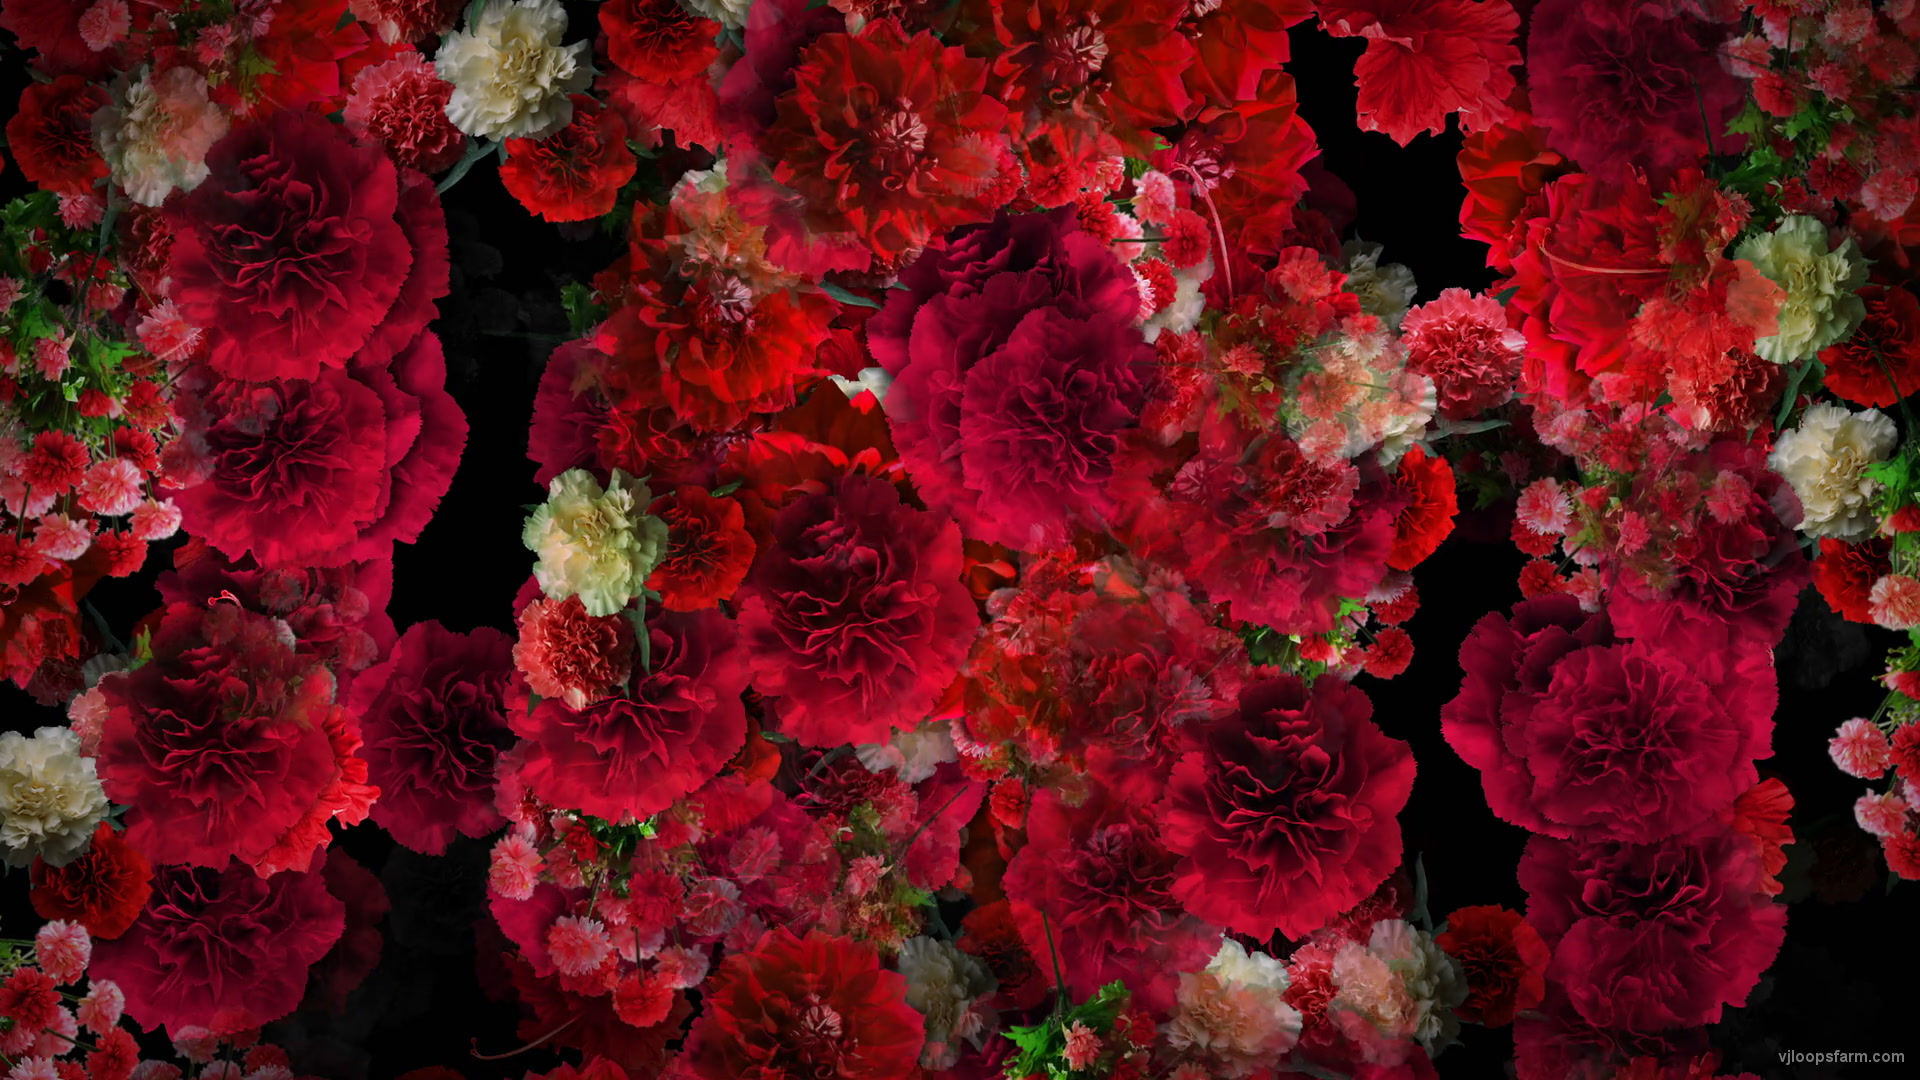 Numerous Red Flowers Slowly Flying Upward on Looped Motion Background